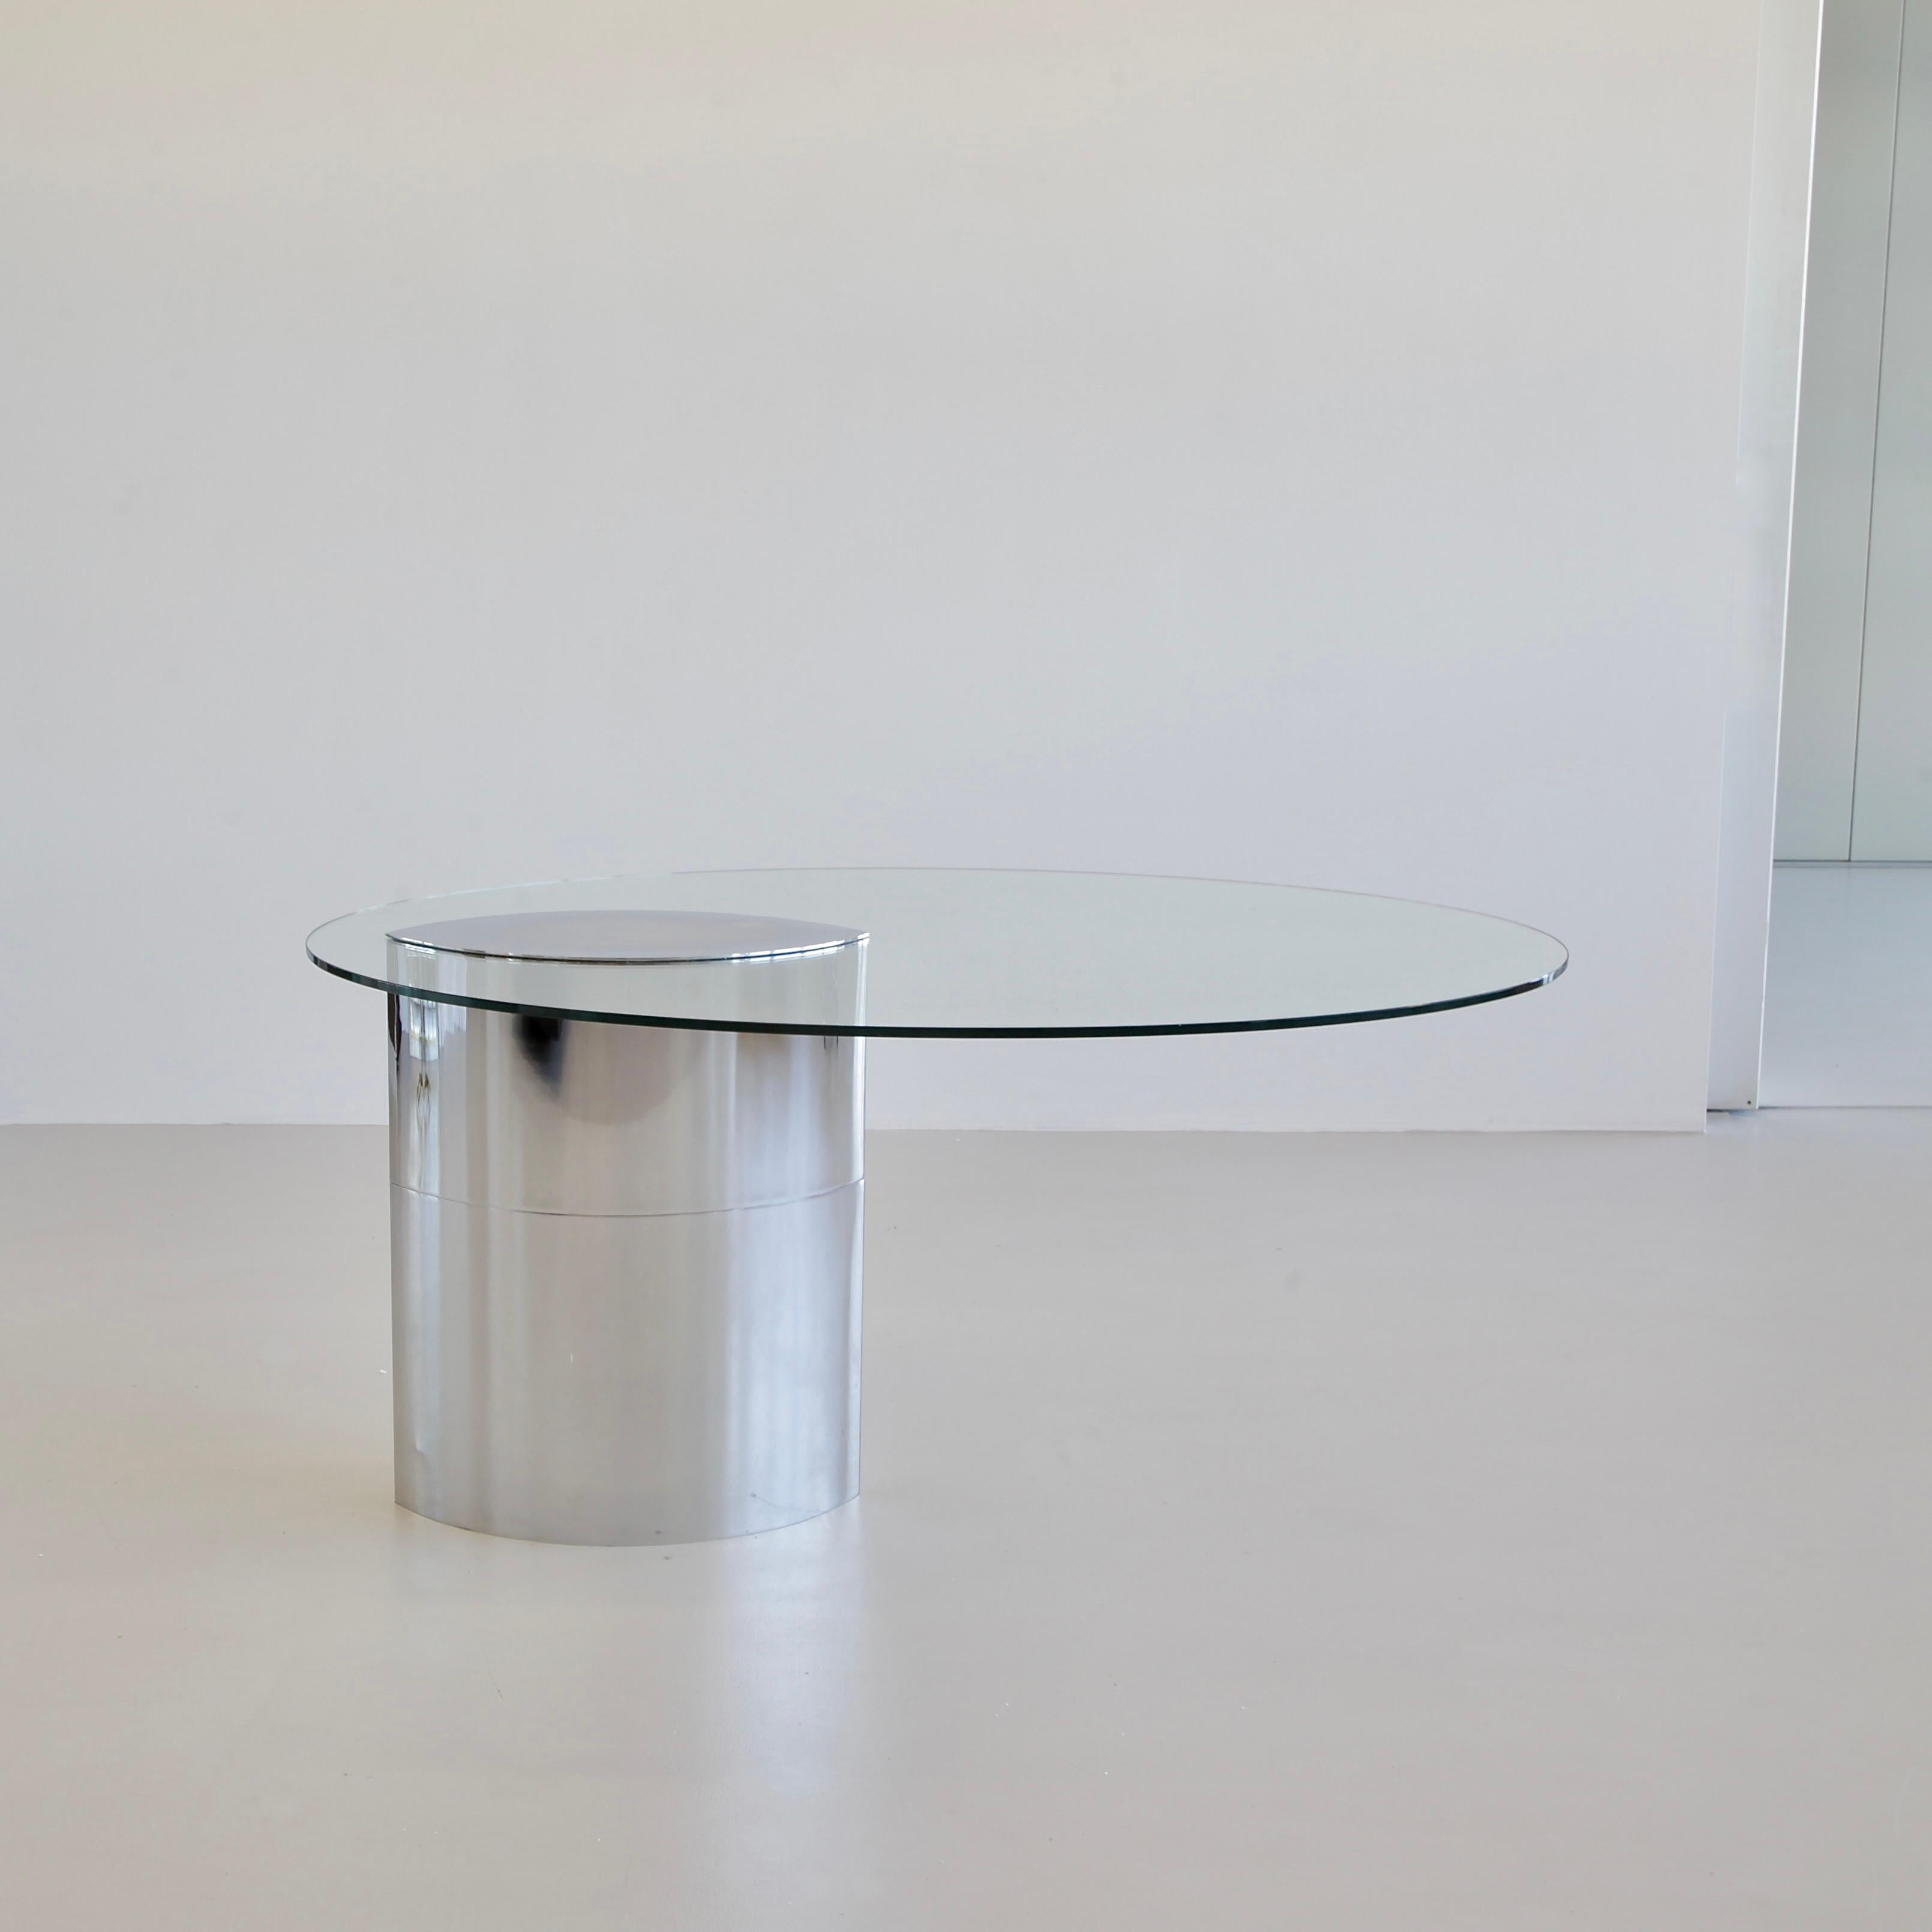 Late 20th Century Table or Desk Designed by Cini Boeri, Italy, Gavina, 1971